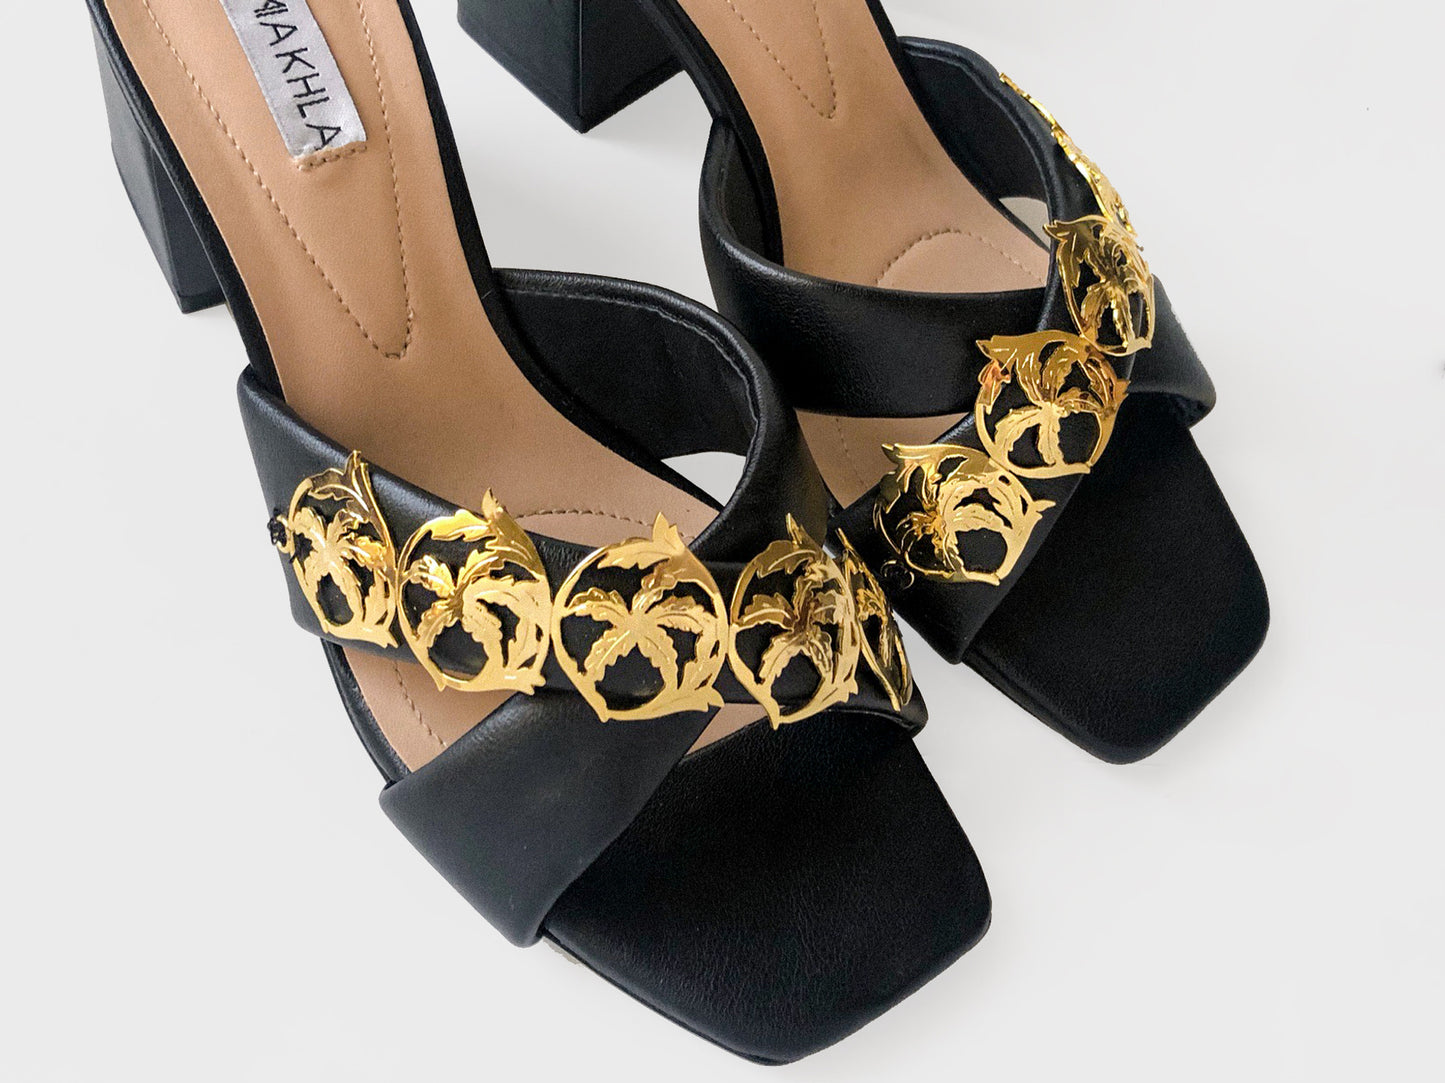 MALIBU Sandals - Gold